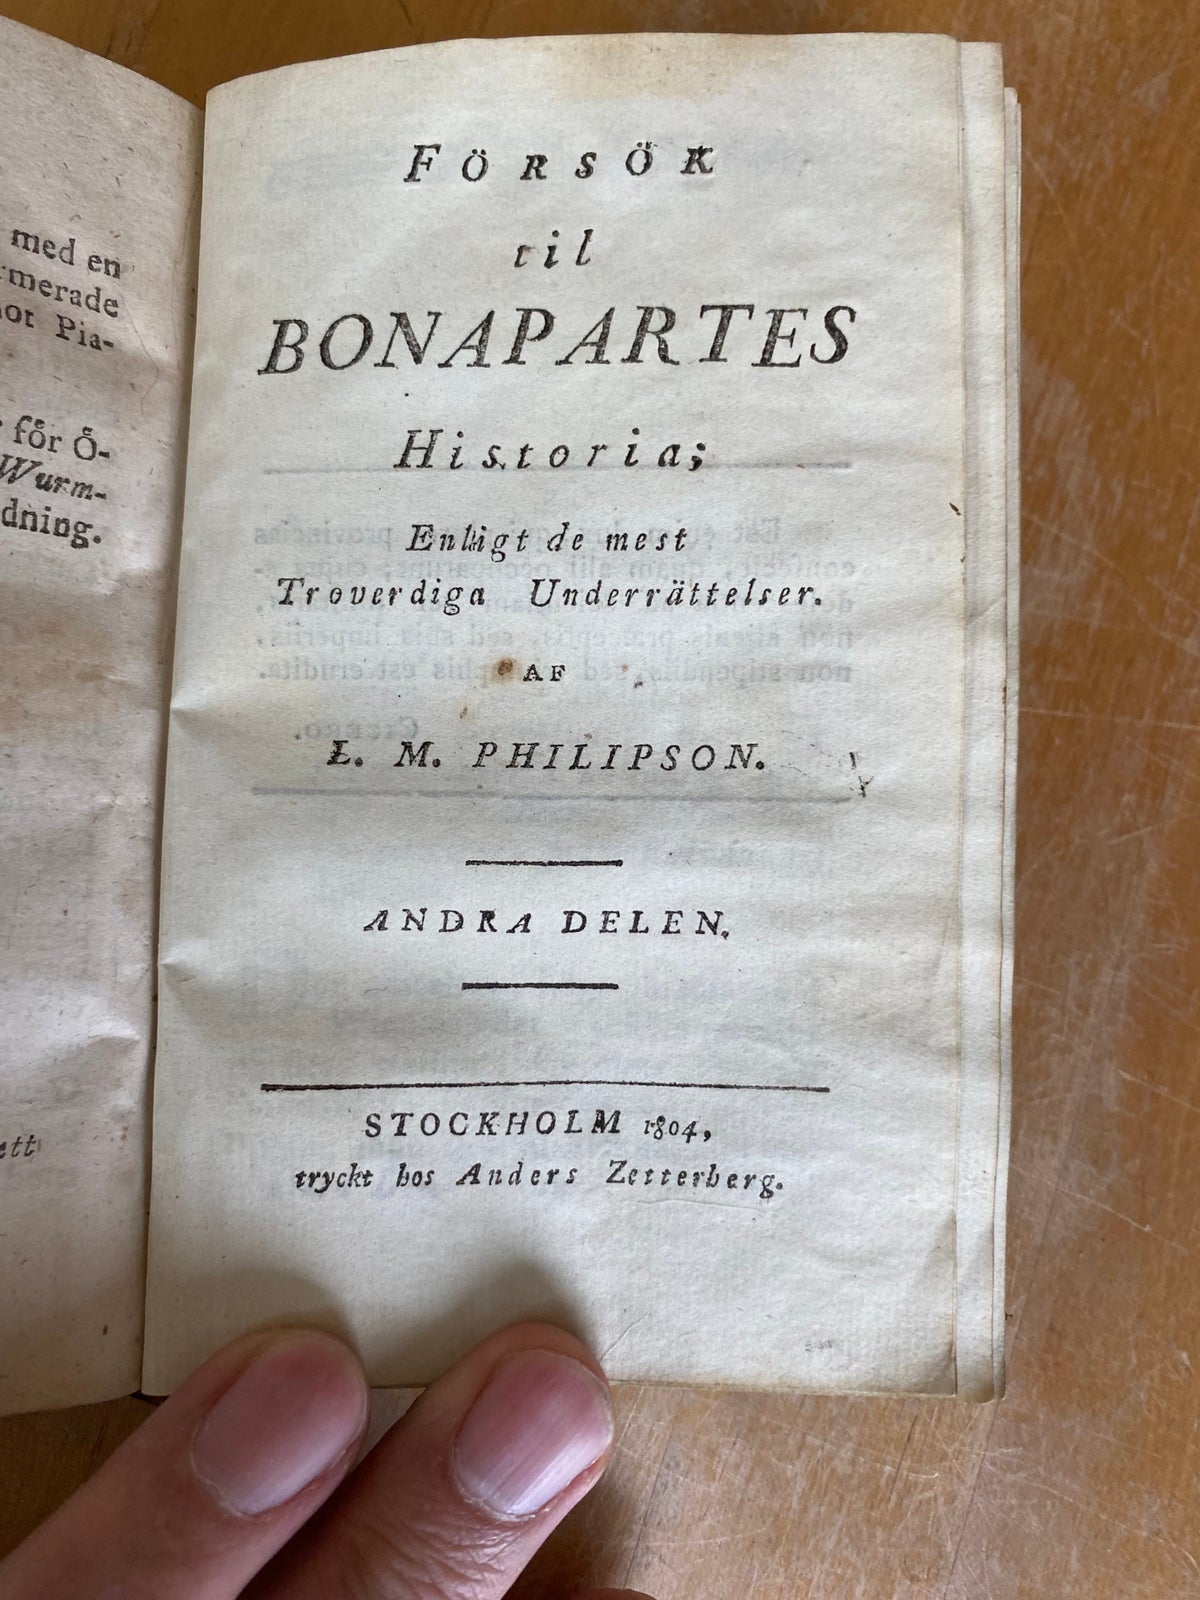 Forsök Till Bonapartes historia, L. M. Philipson, genre: